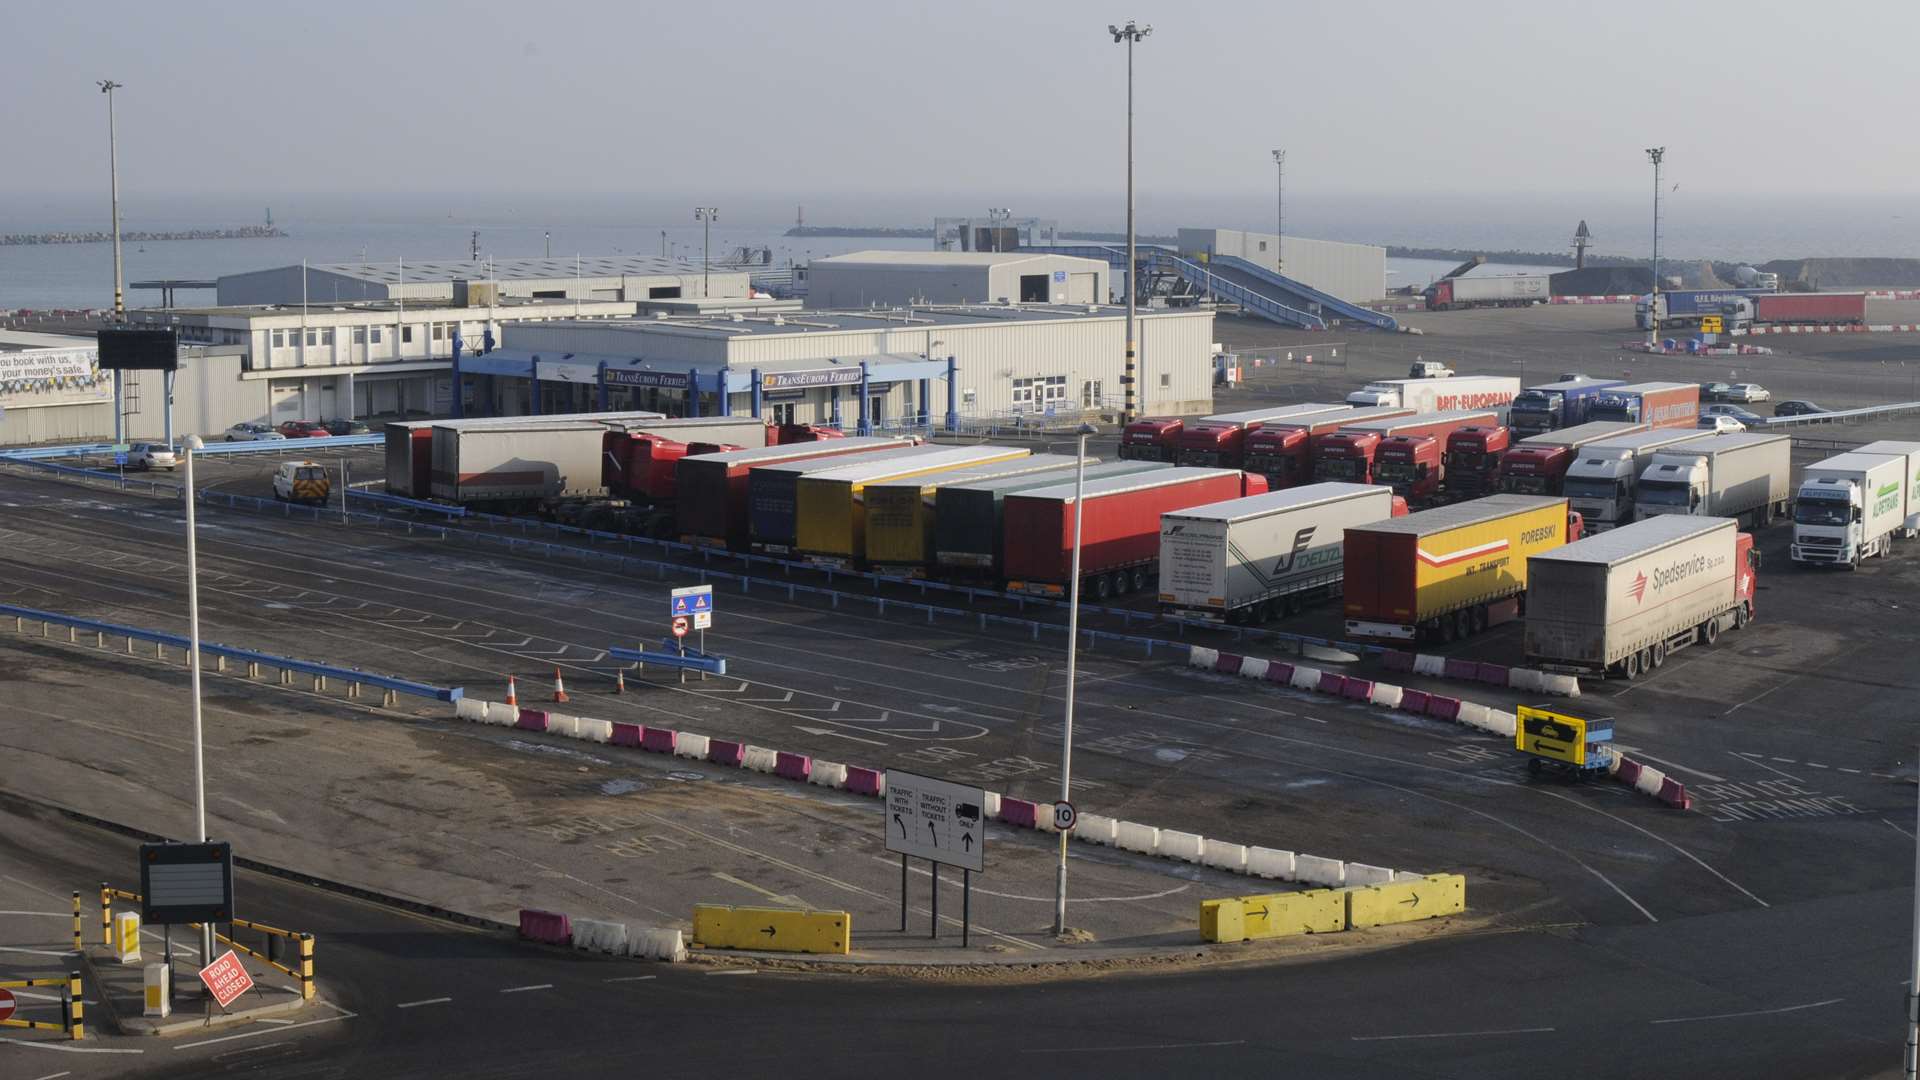 Fraud allegations over dredging at Port of Ramsgate